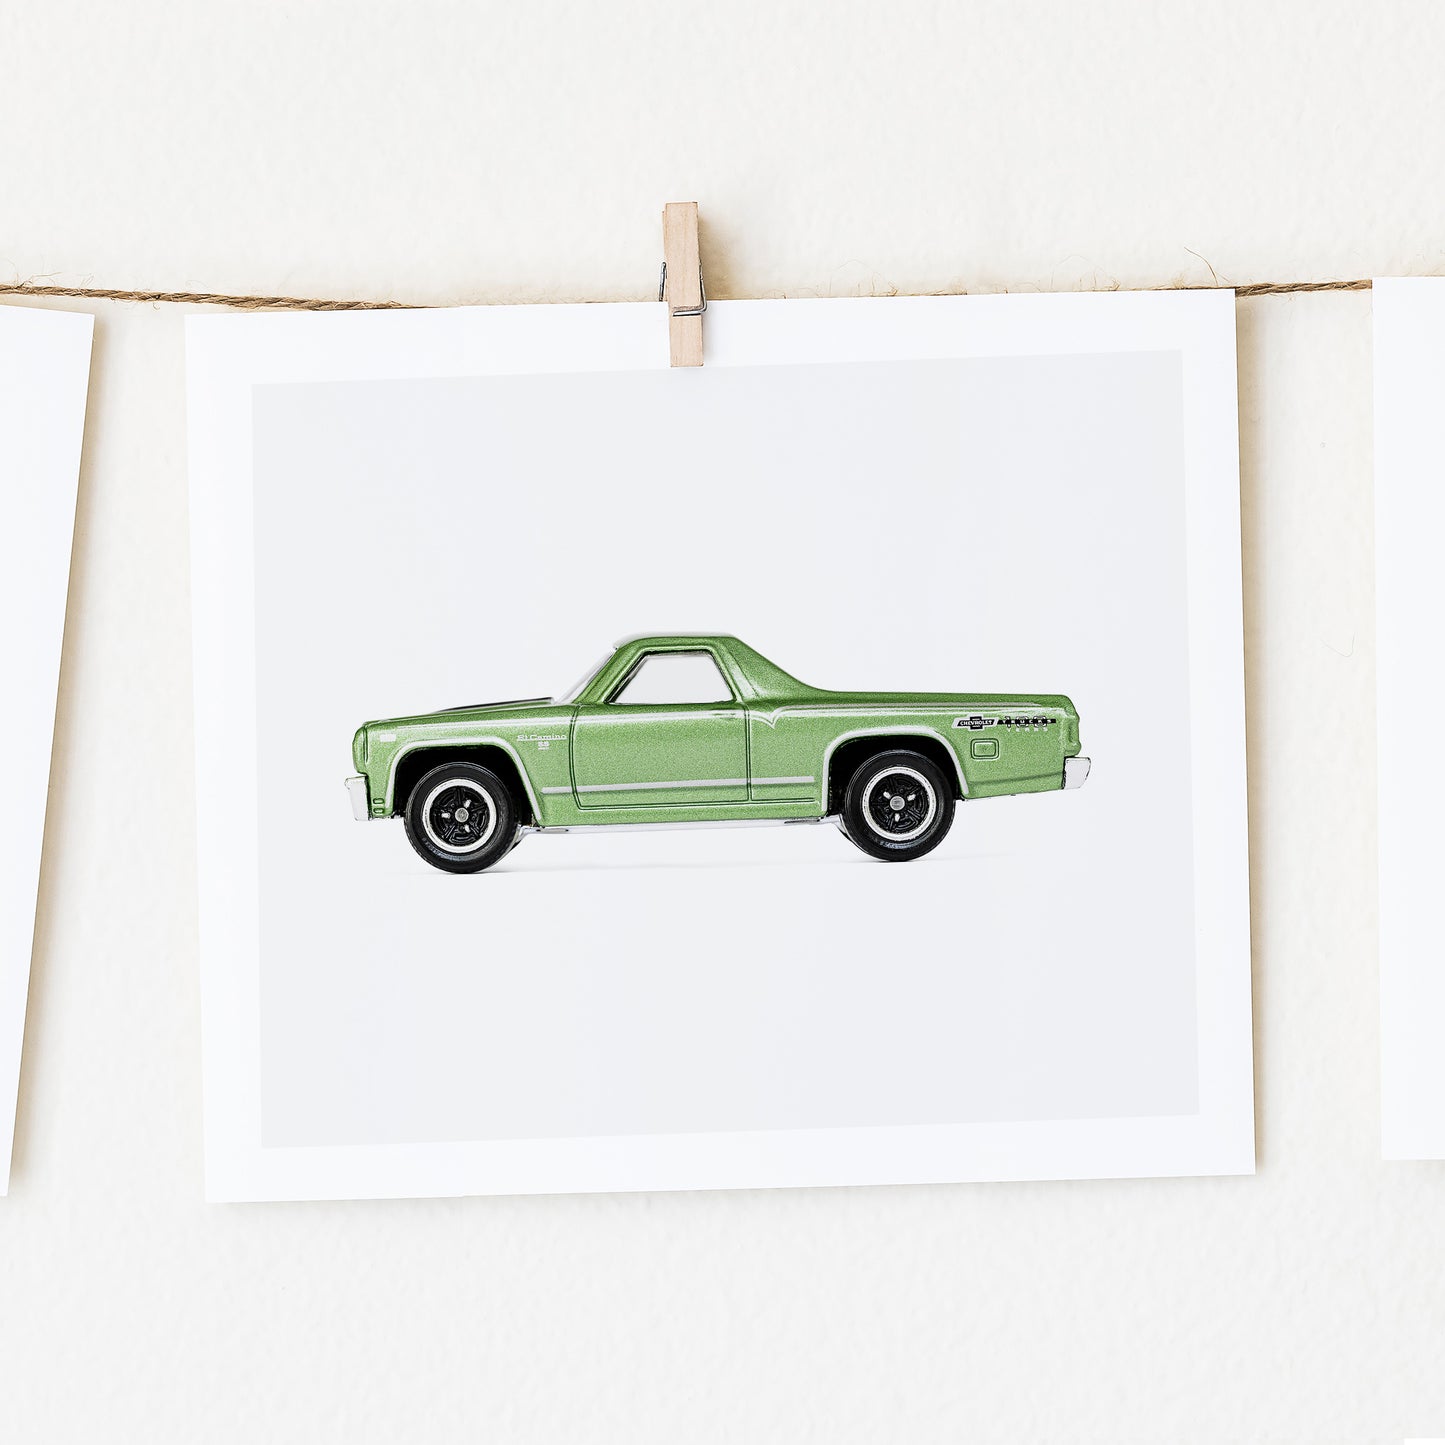 pickup truck art print for boys' nursery